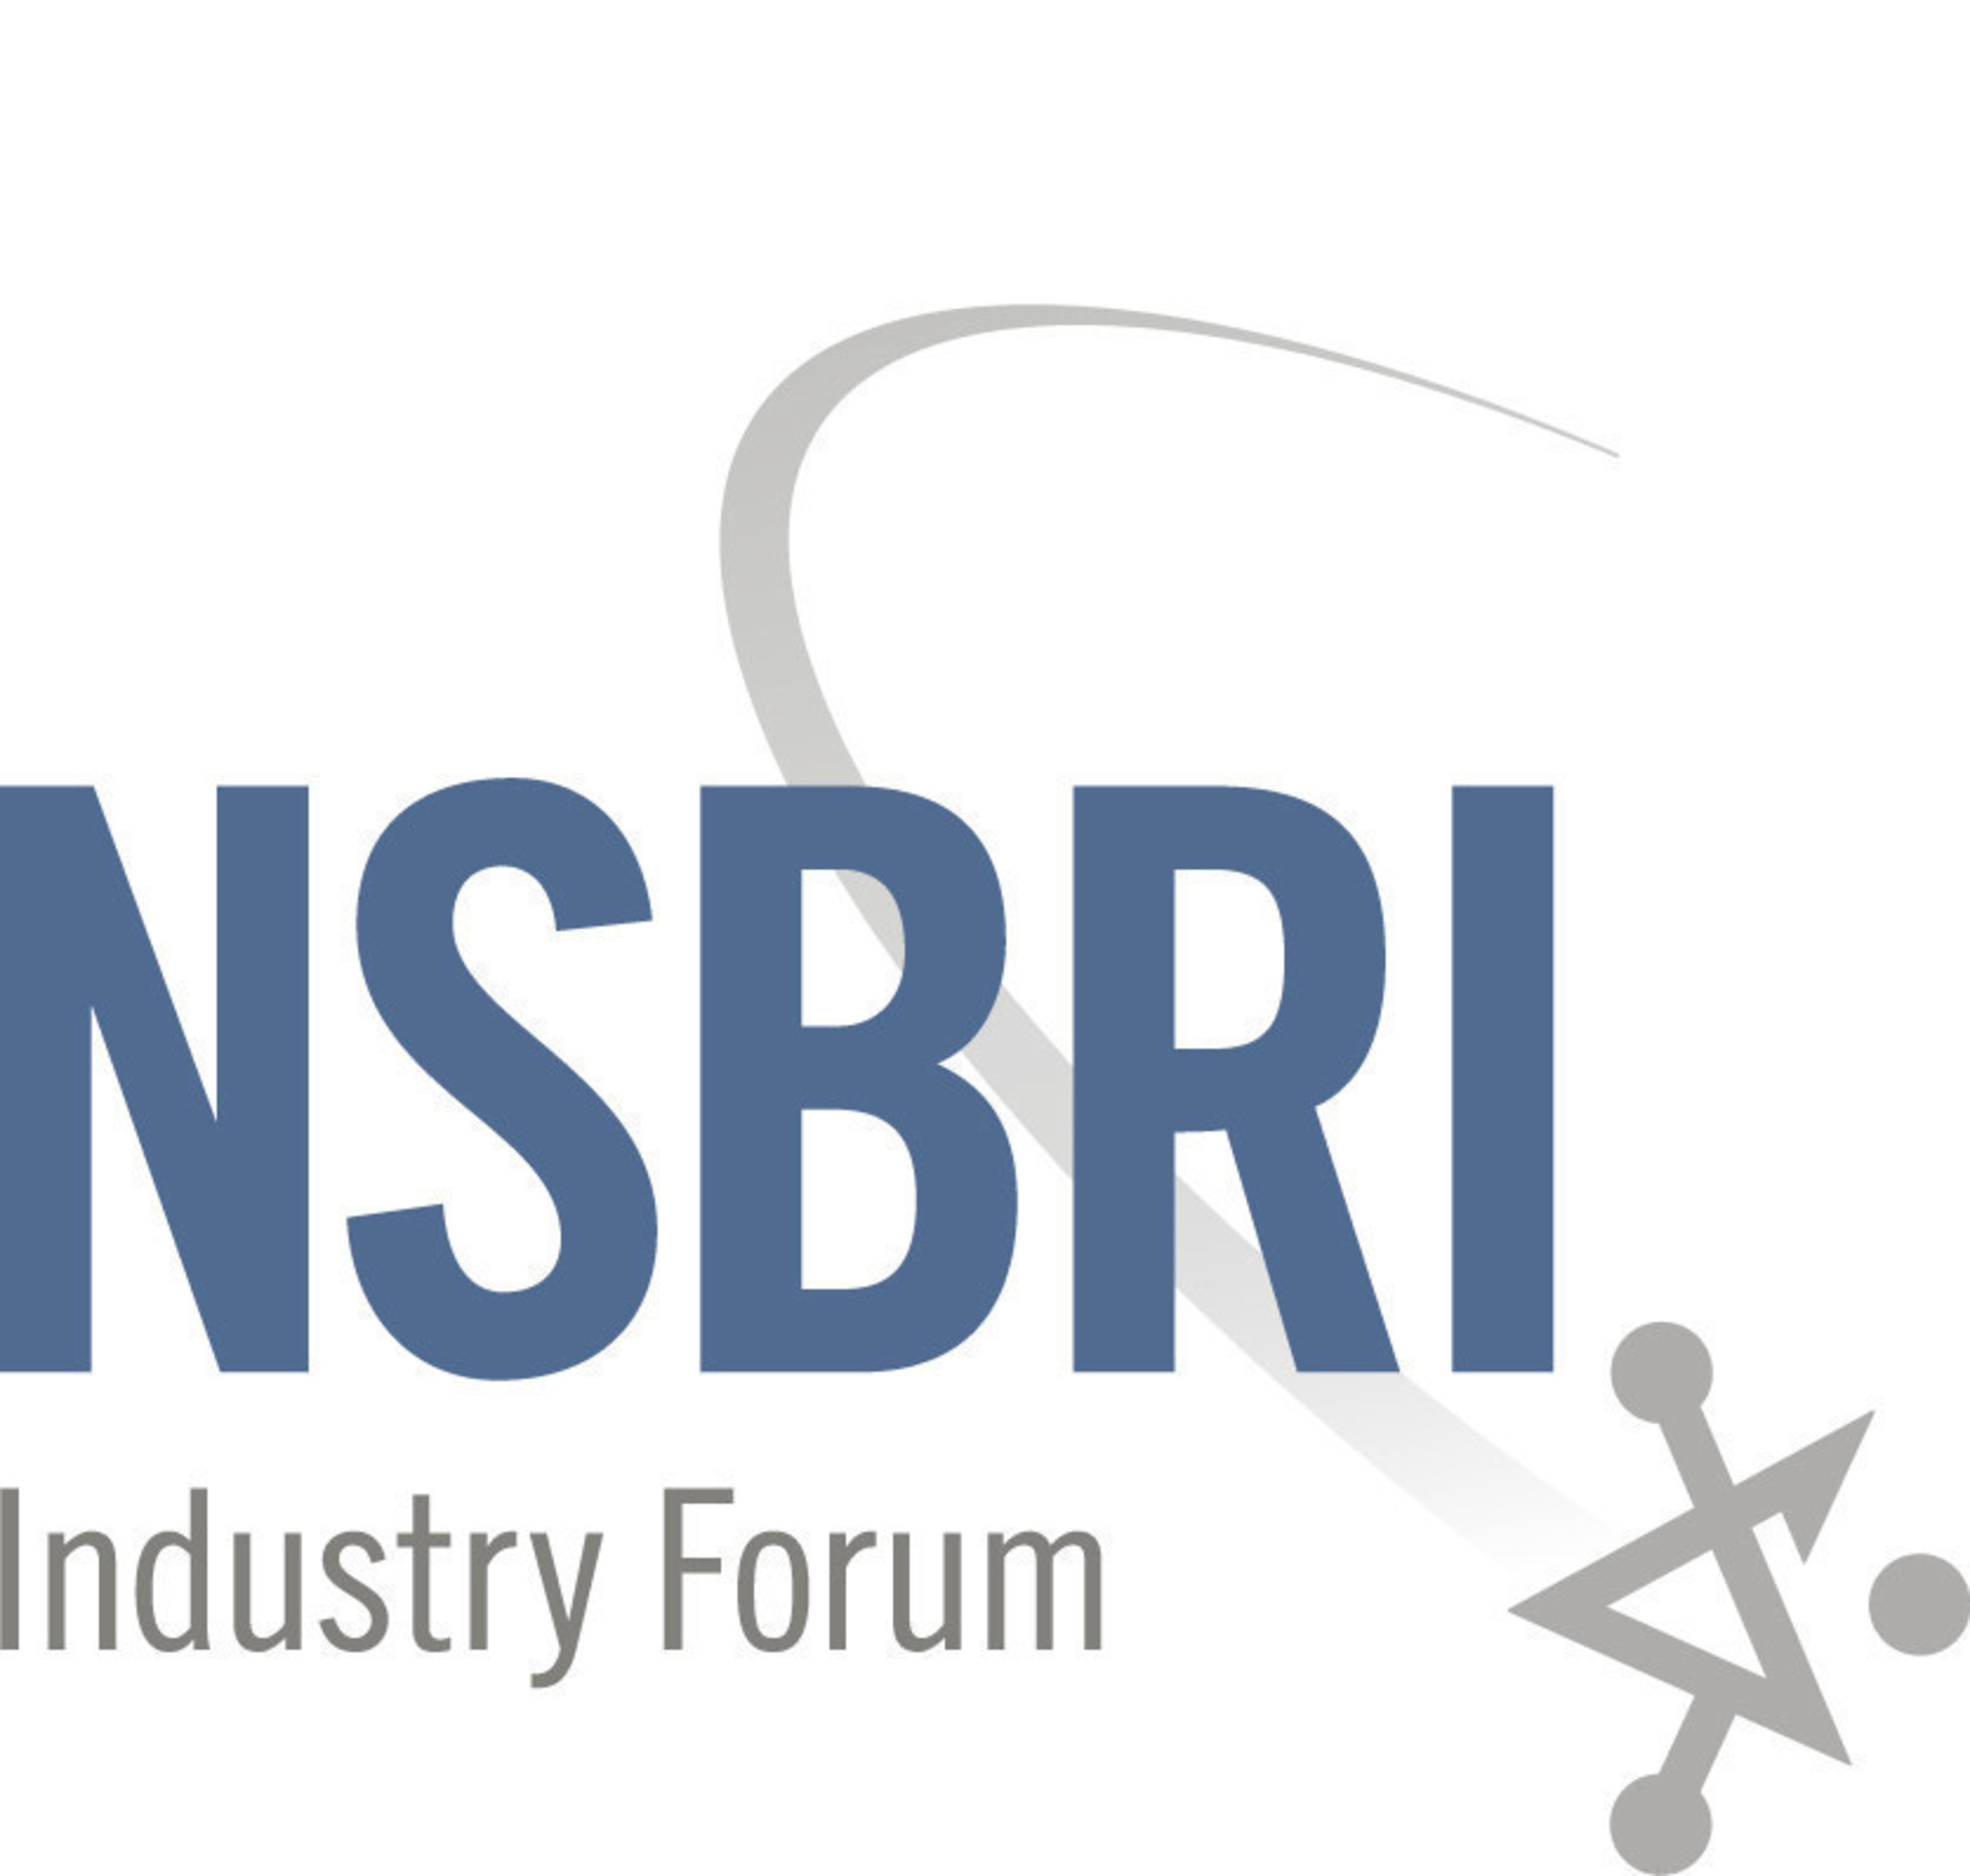 NSBRI Industry Forum